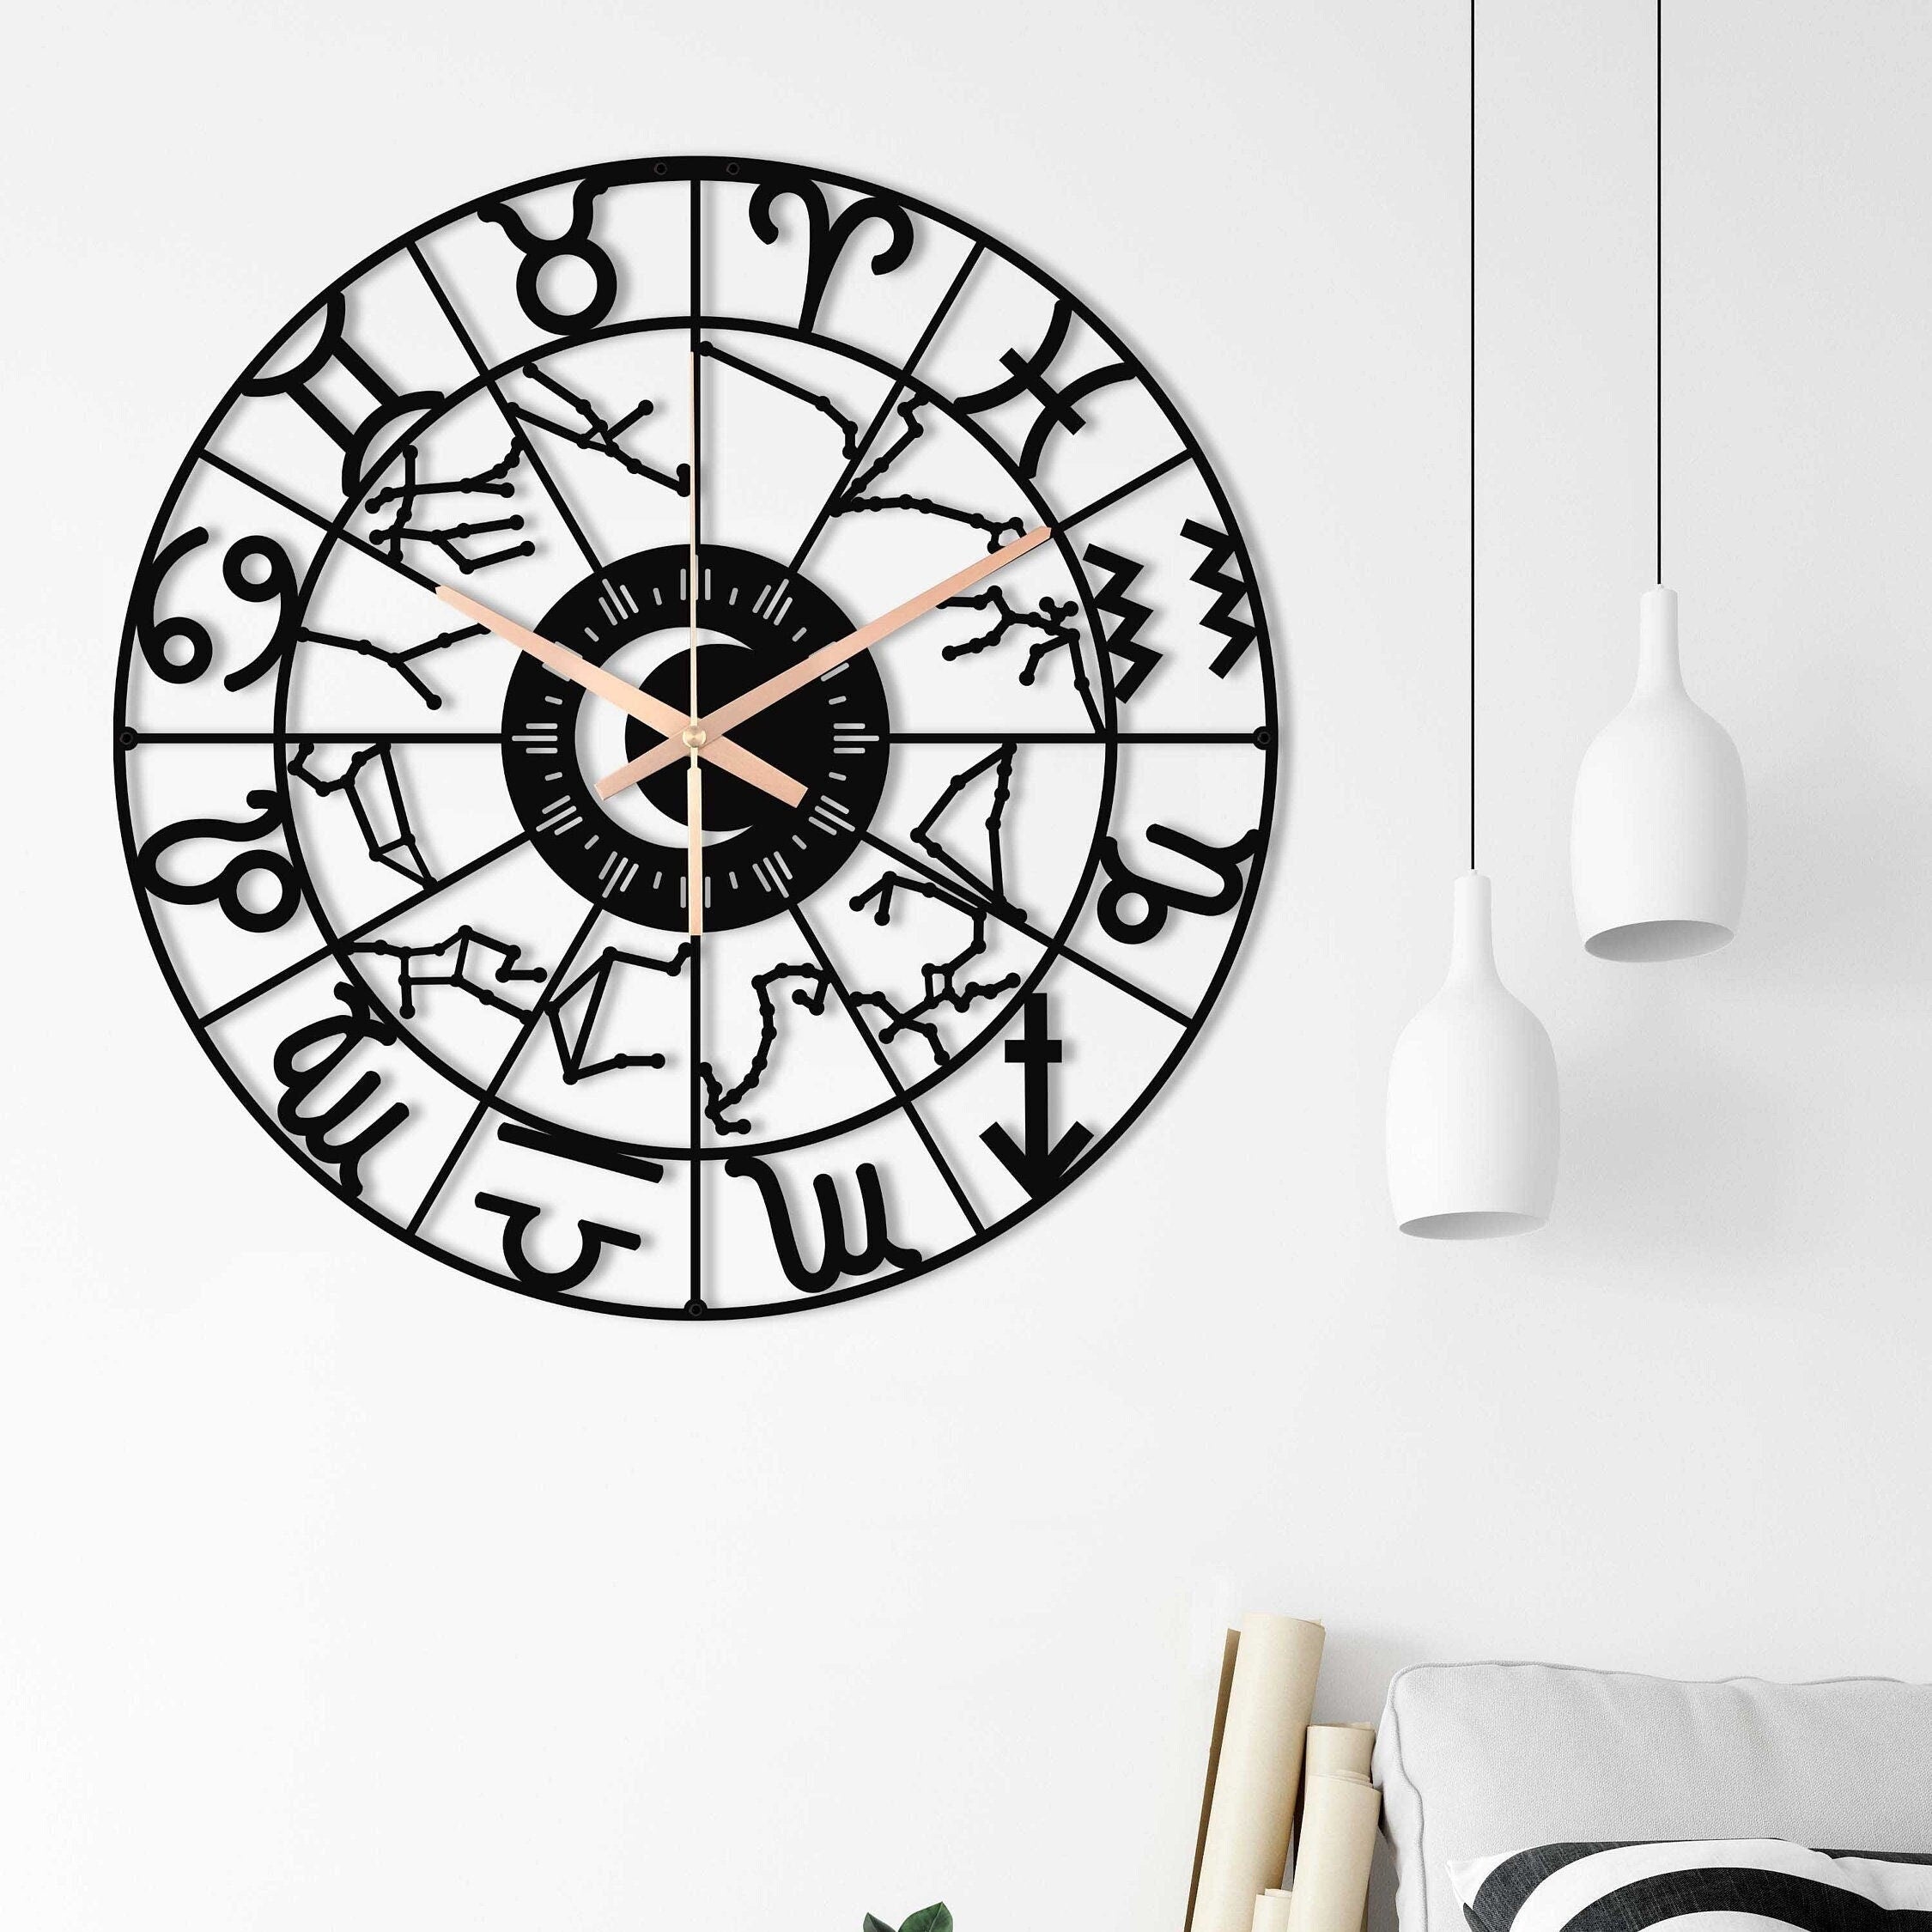 Large Horoscope Clock, Modern Wall Clock, Black Wall Clock, Silent Wall Clock, Unique Wall Clock, Oversized Wall Clock, Clocks For Wall